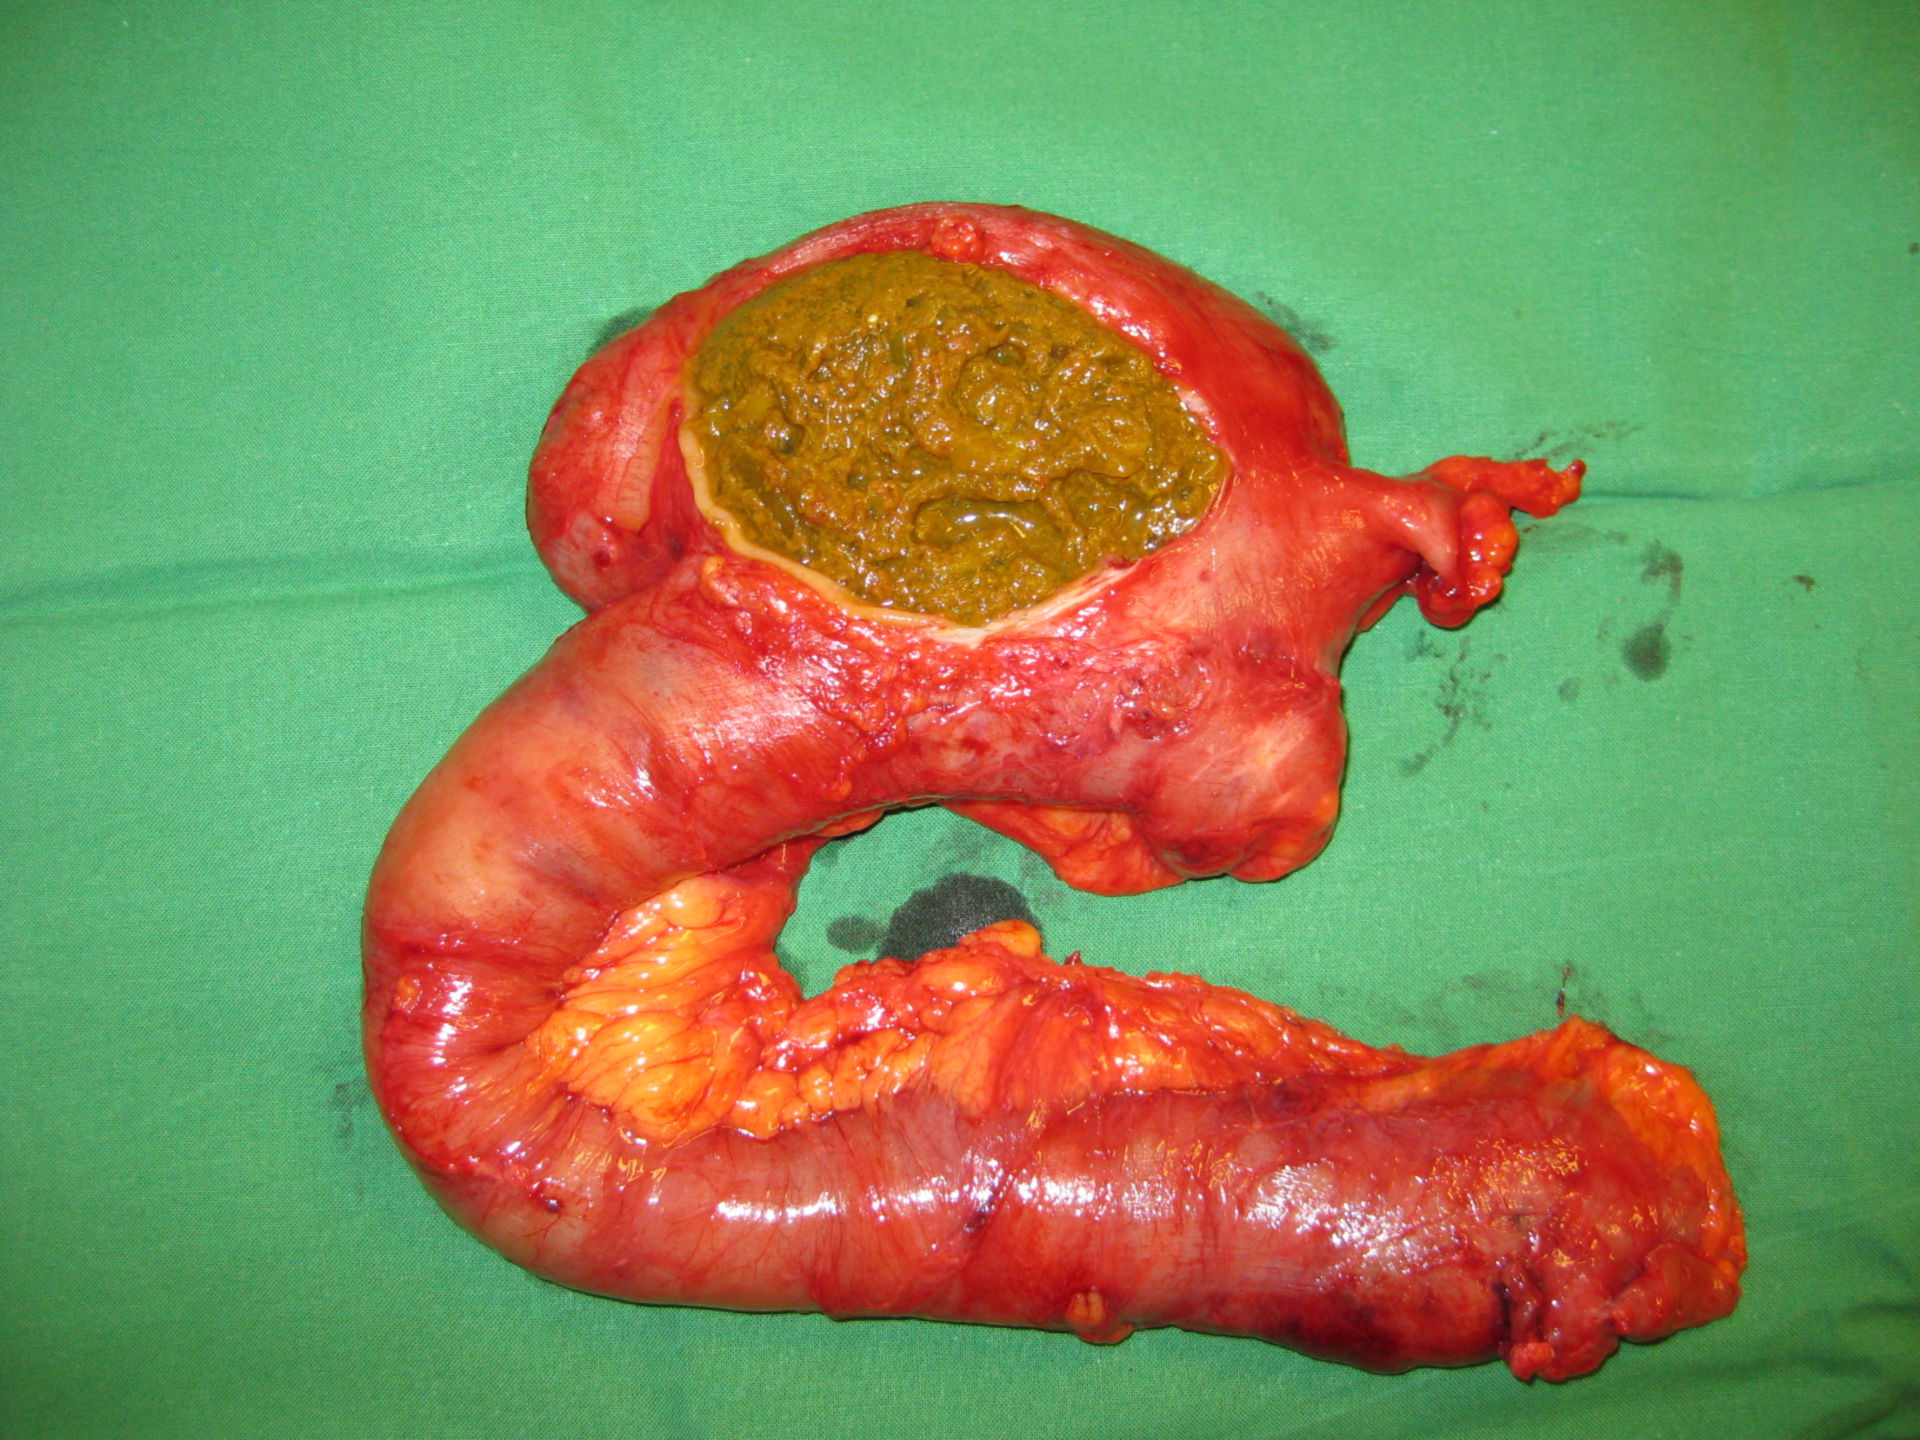 Bowel obstruction due to indigestible fuit peel - Phytobezoar